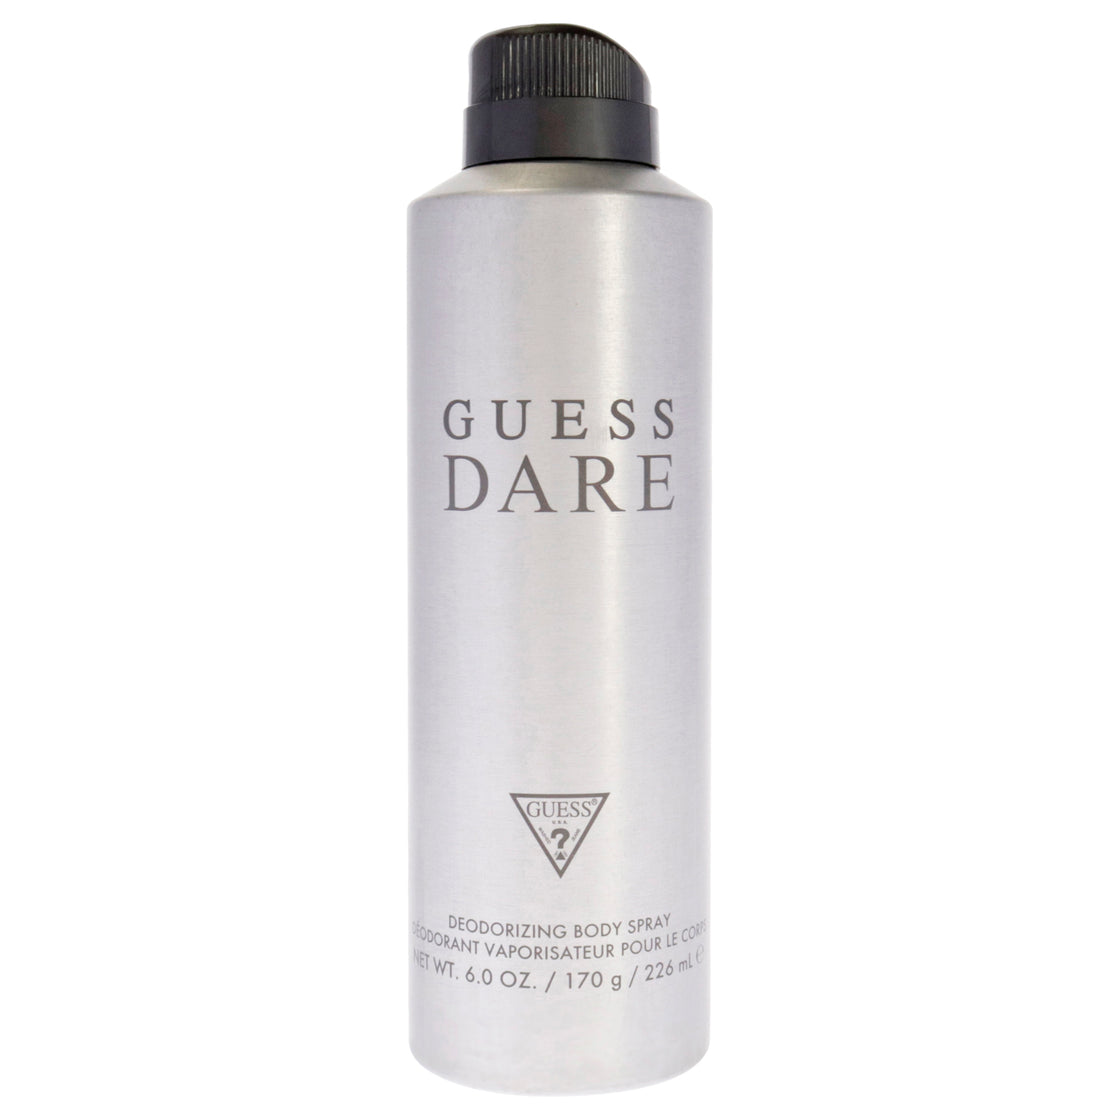 Guess Dare Body Spray by Guess for Men - 6 oz Body Spray